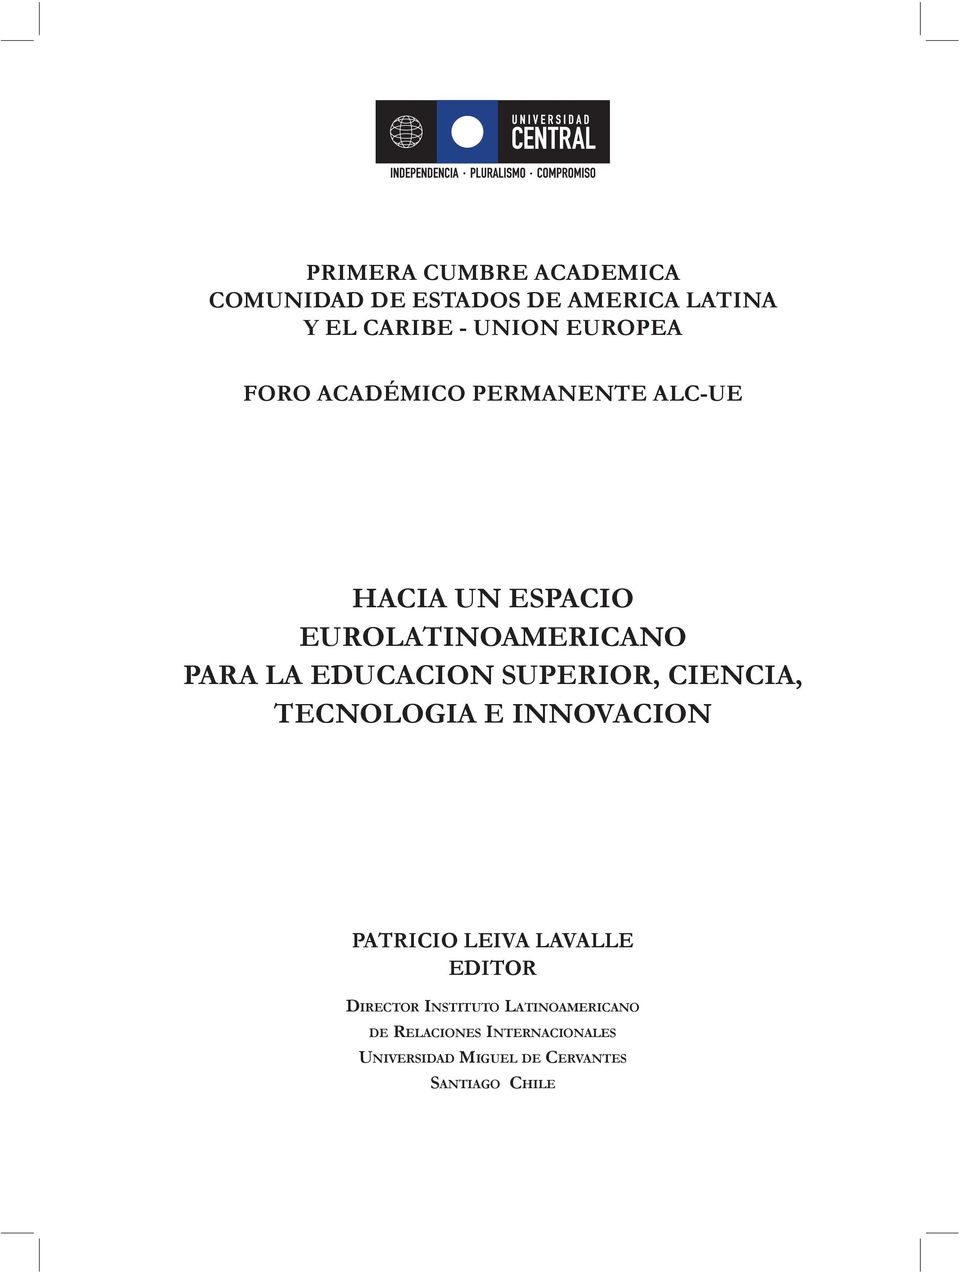 EDUCACION SUPERIOR, CIENCIA, TECNOLOGIA E INNOVACION PATRICIO LEIVA LAVALLE EDITOR